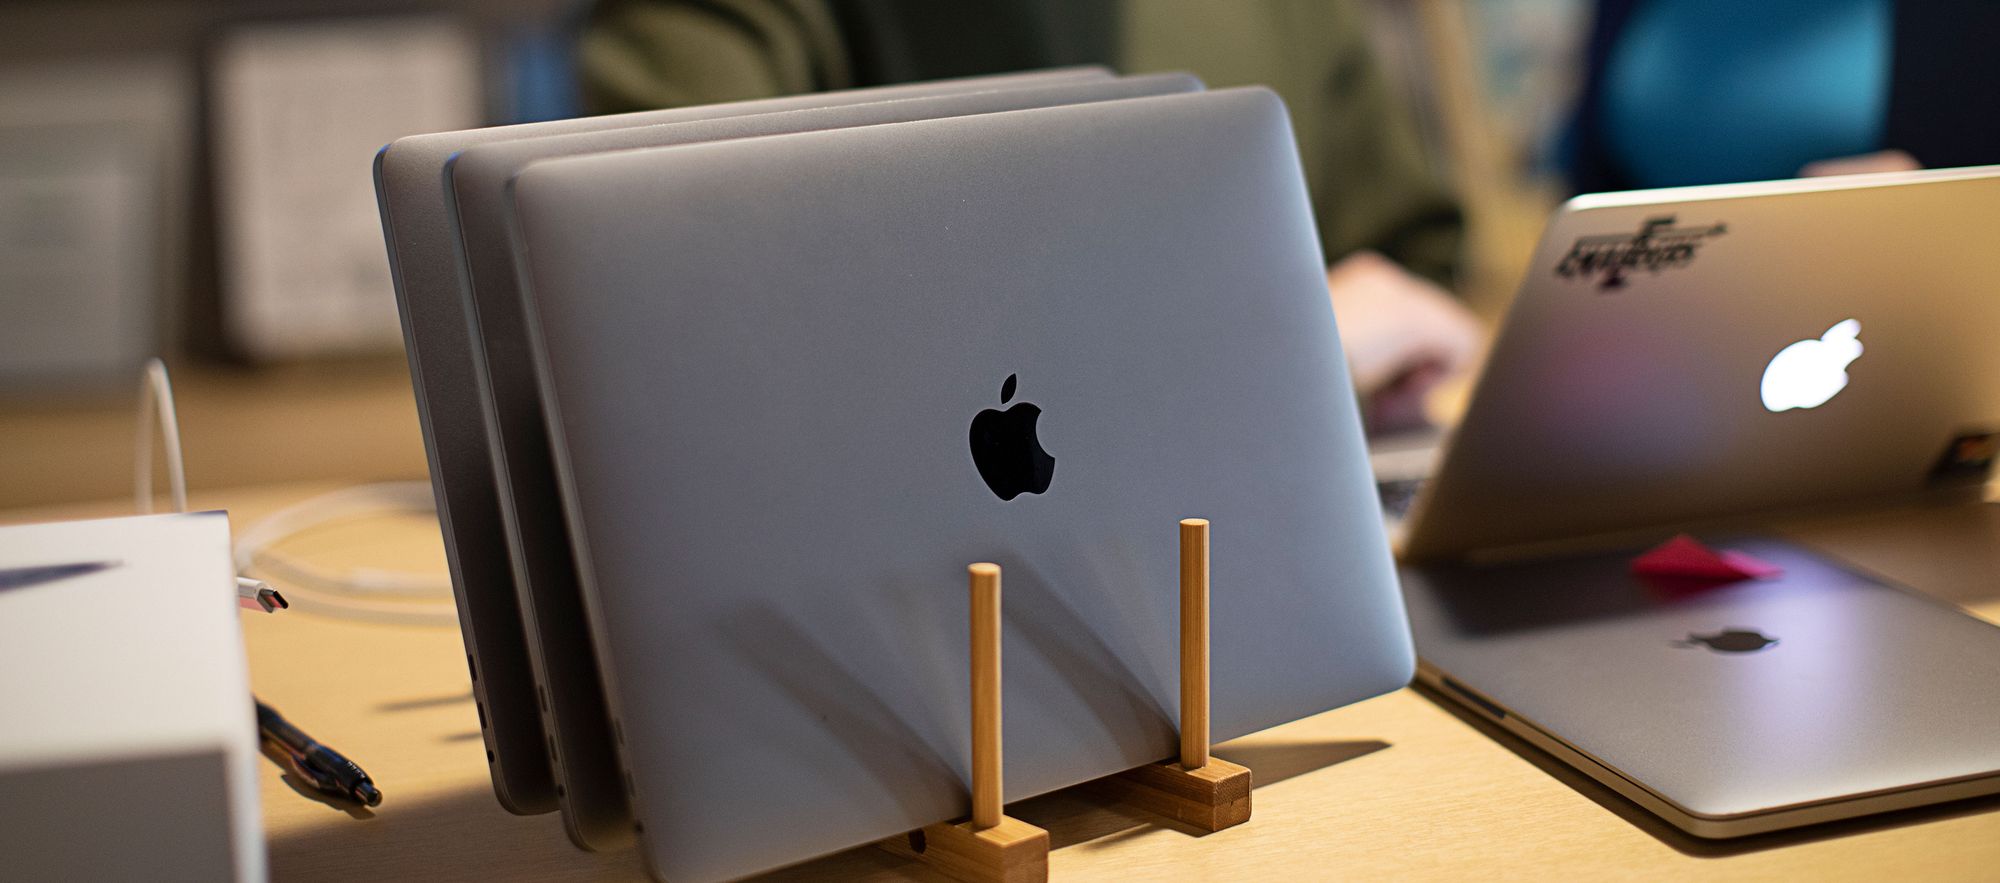 5 MacBooks on a desk